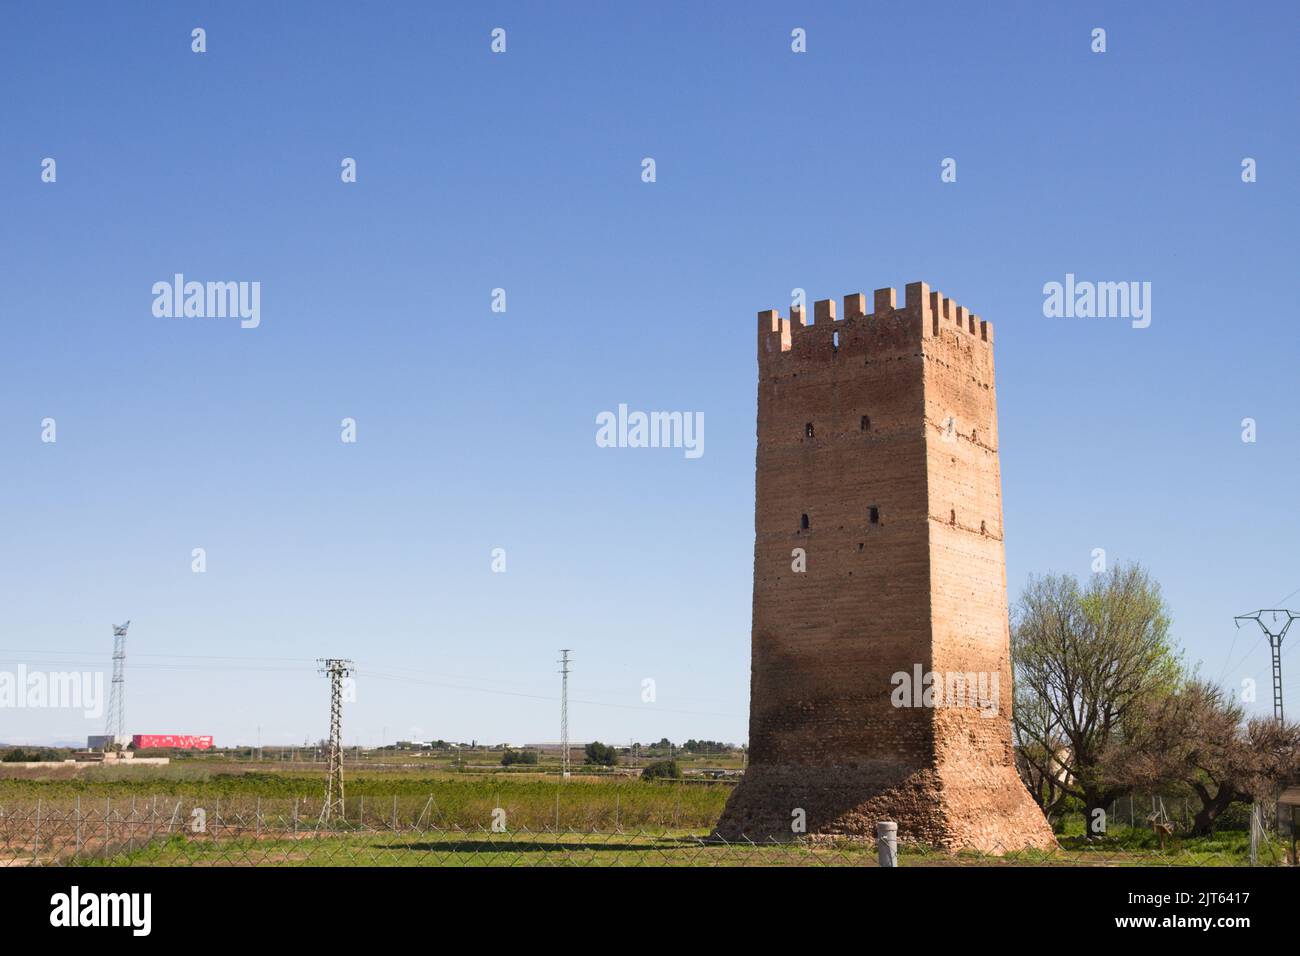 April, Benifaió, Valencia (Spain). Panoramic view of the Muza or Mussa tower of Arab origin from the 12th century near the city of Benifaió in Valenci Stock Photo